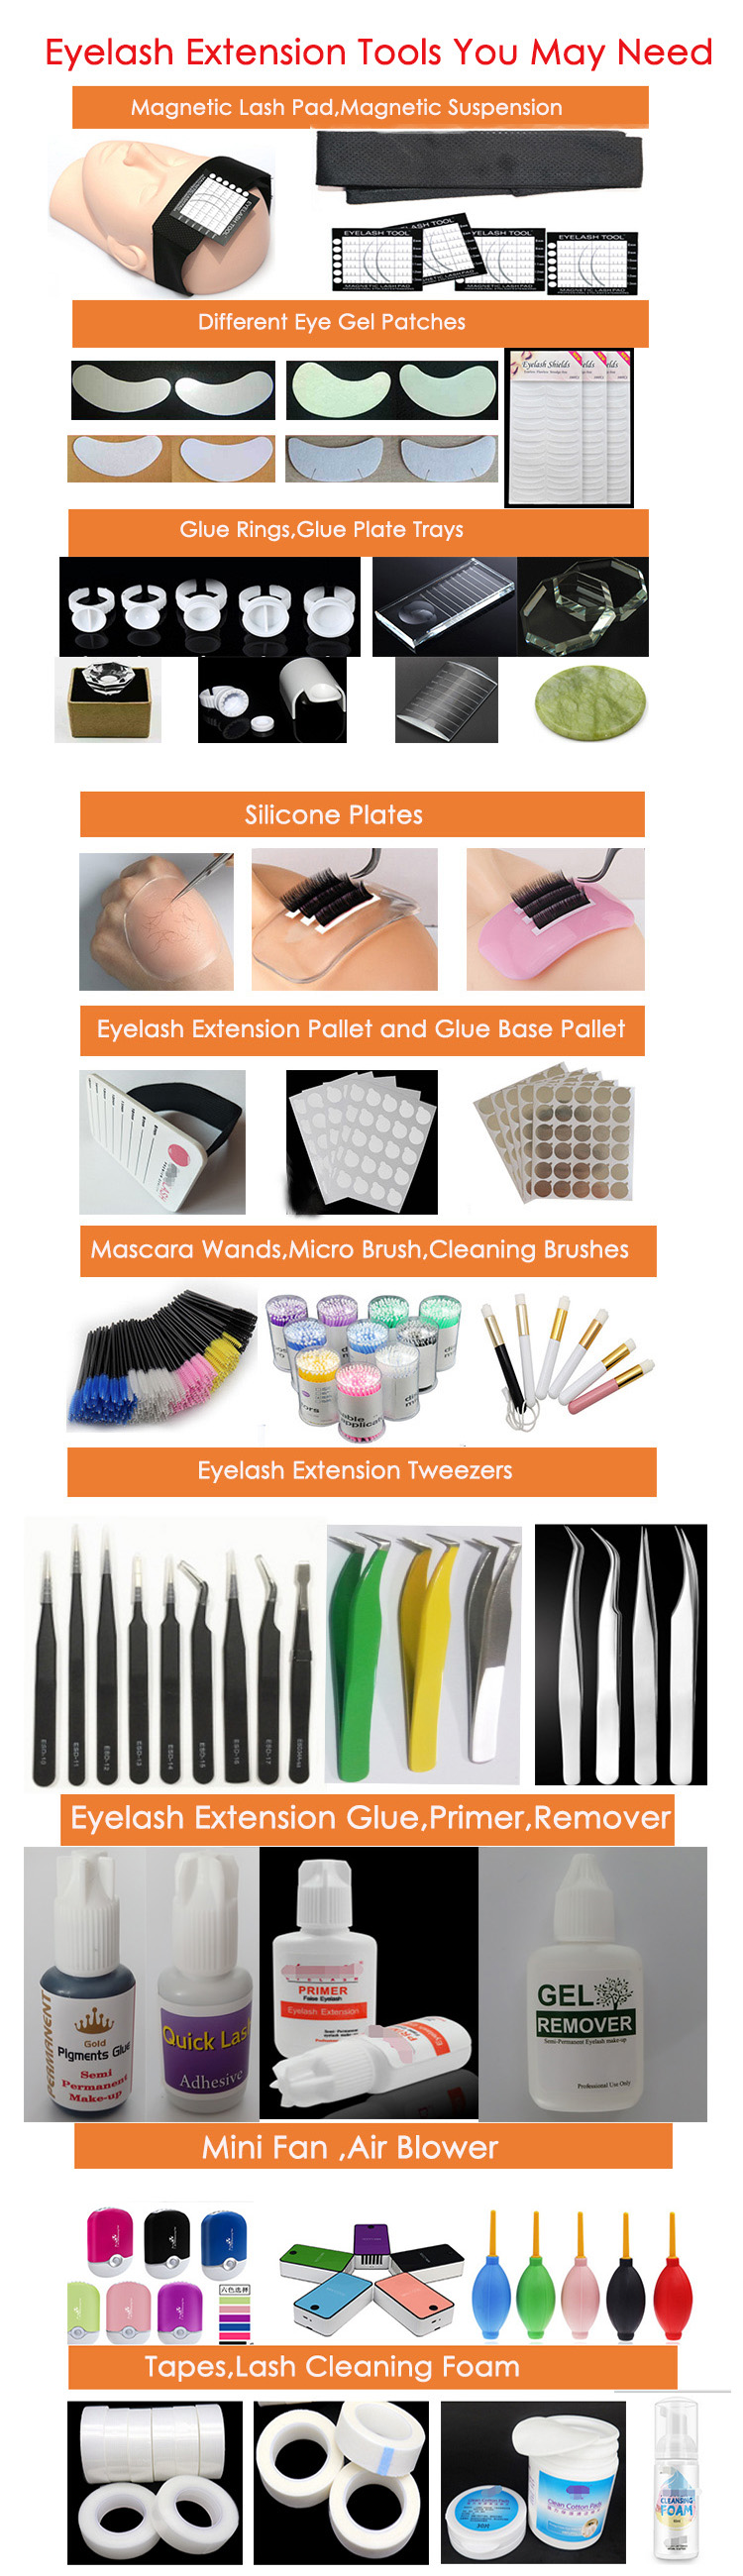 eyelash extension tools wholesale supply China.jpg